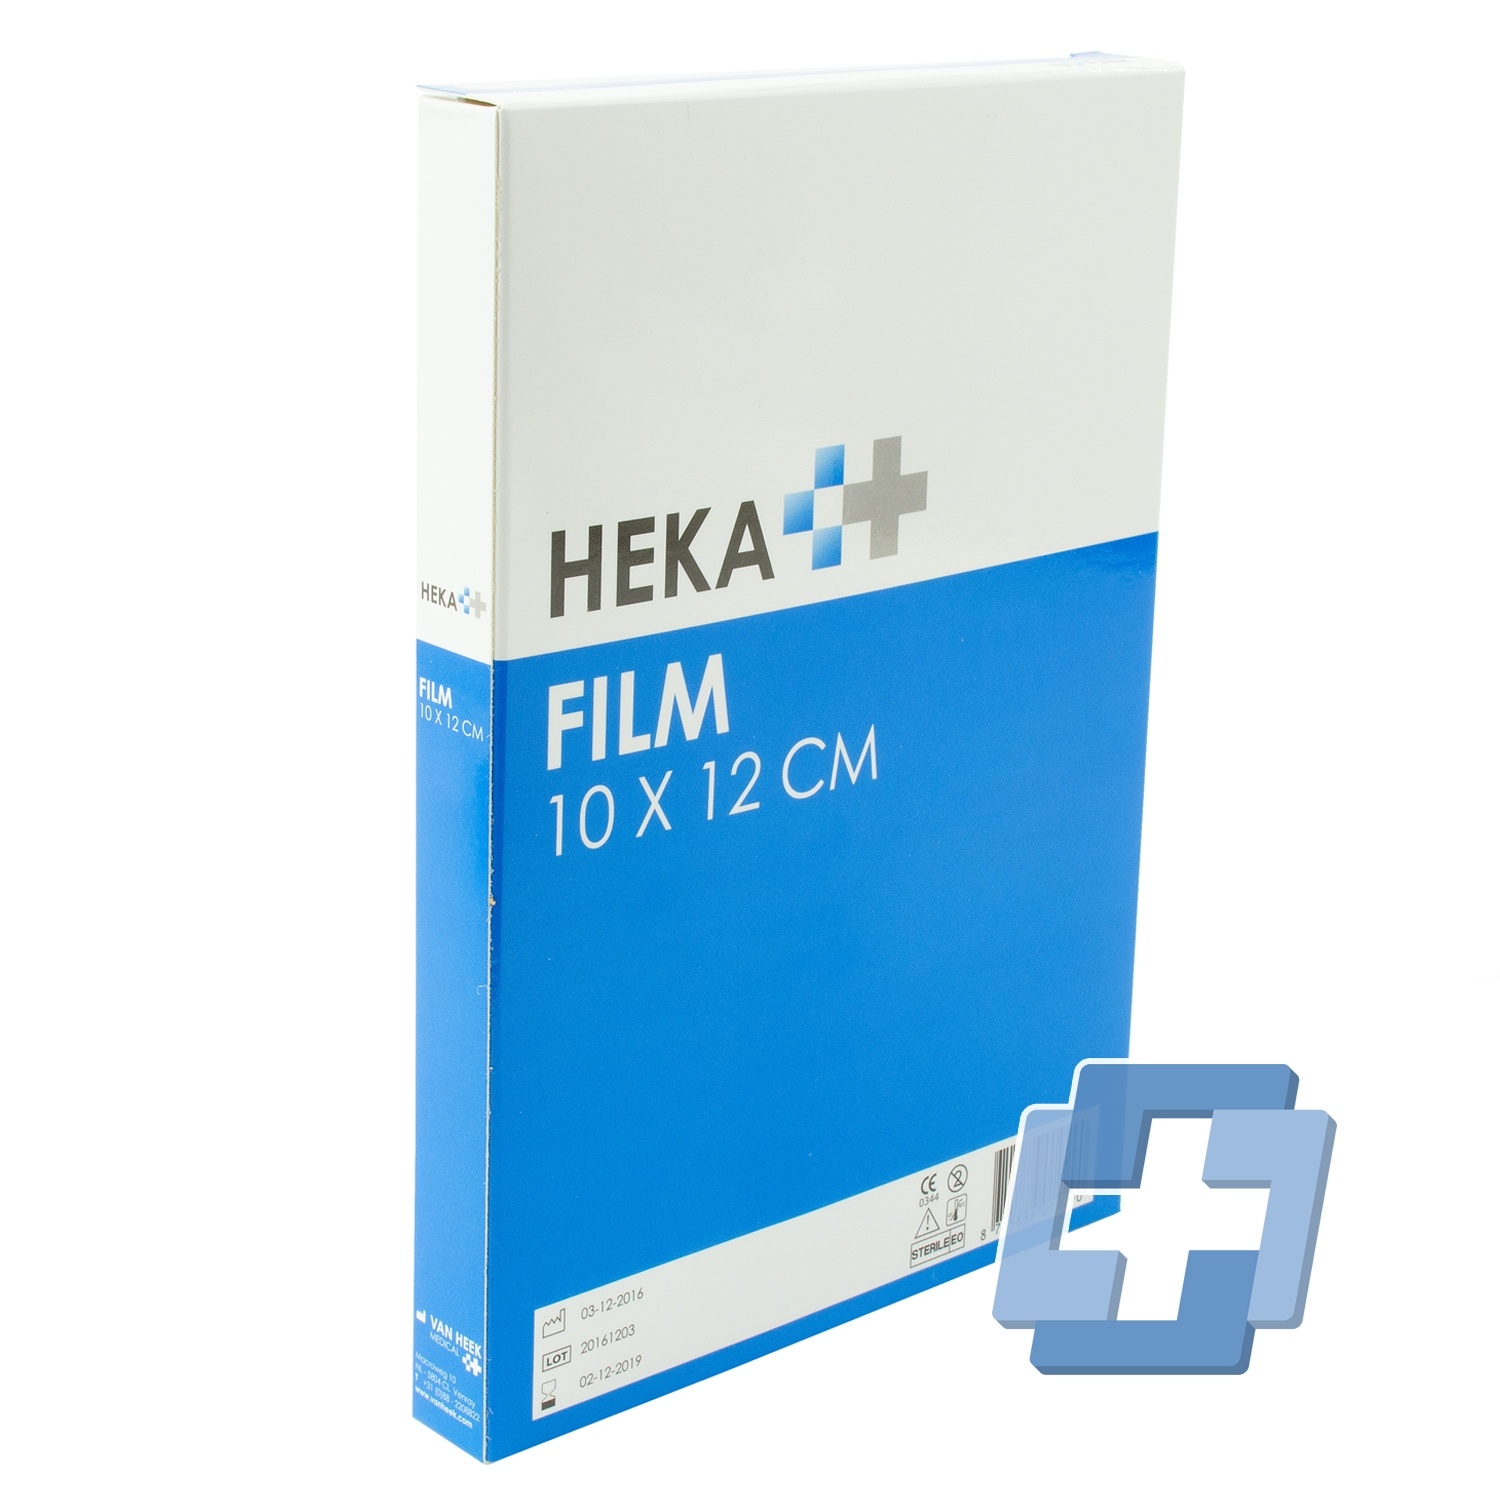 HEKA Film steriel - 10 x 12 cm (5 stuks)